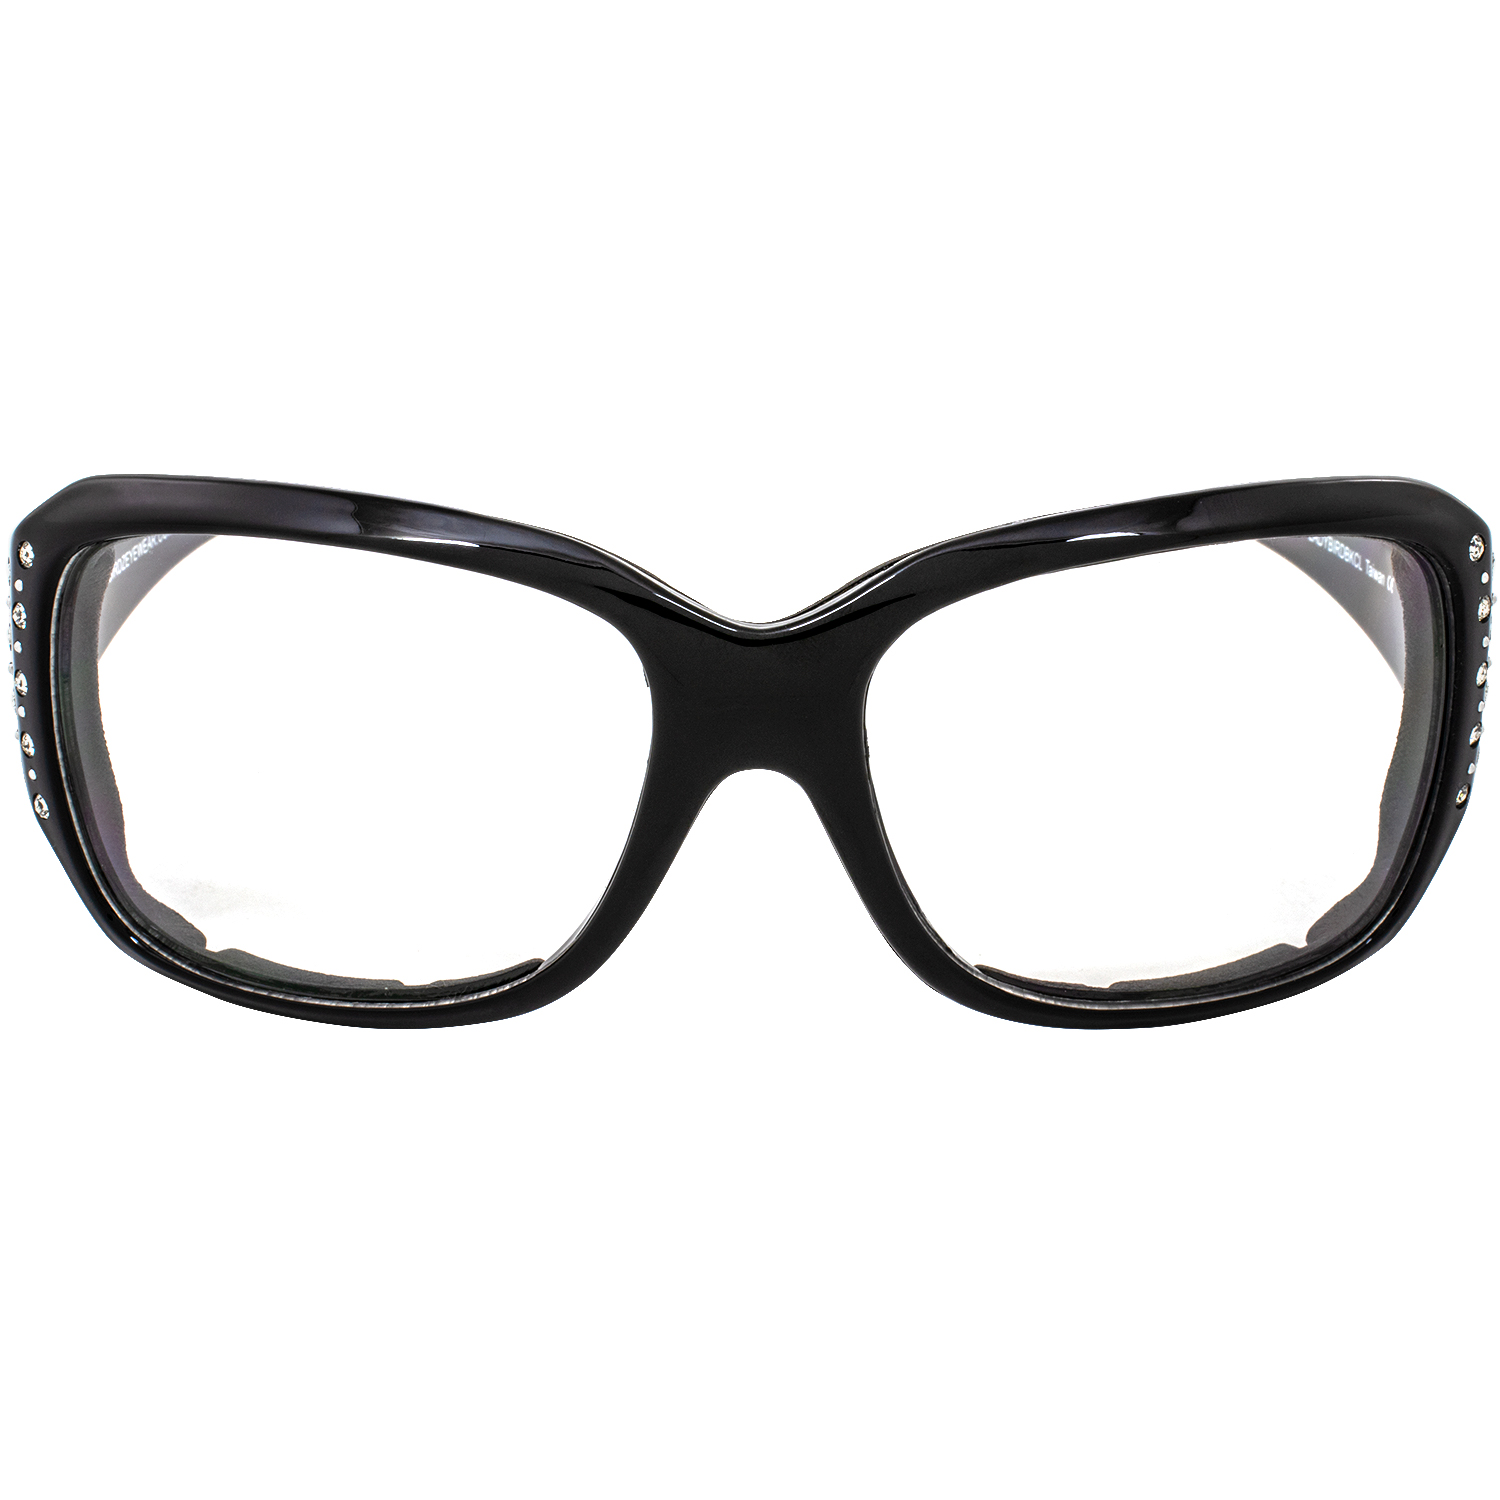 Birdz Eyewear LadyBird Padded Motorcycle Sunglasses Glasses for Women Bling Rhinestone Accents 3 Pairs Black Frame w/Clear Smoke & Driving Mirror Lenses - image 2 of 9